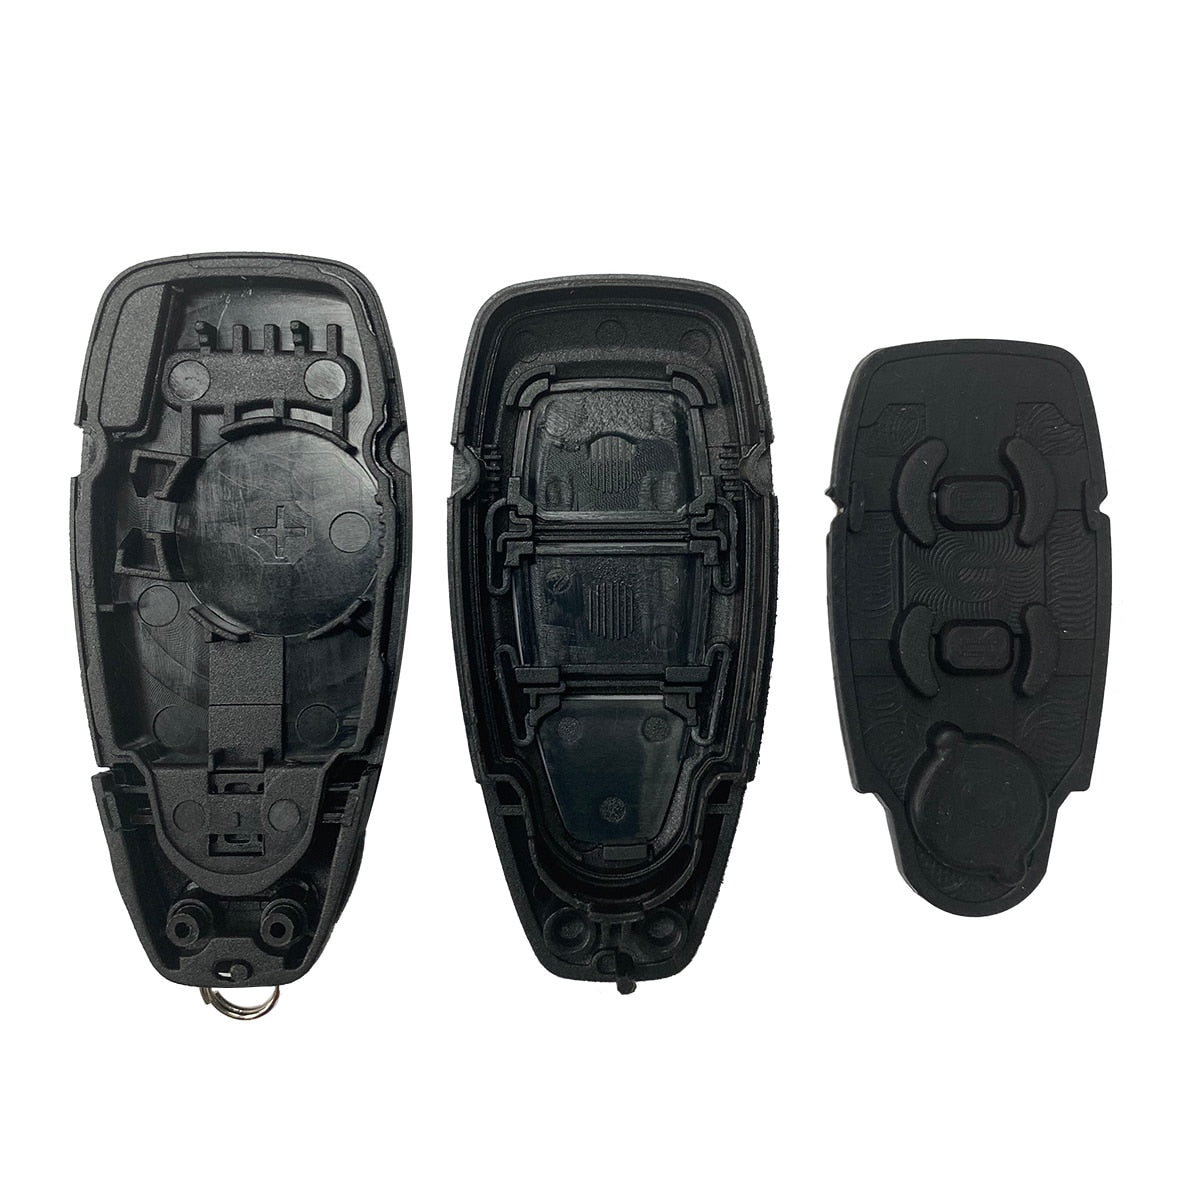 Car Auto Remote Key Case 3-Button For Ford Focus C-Max Mondeo Kuga Fiesta B-Max